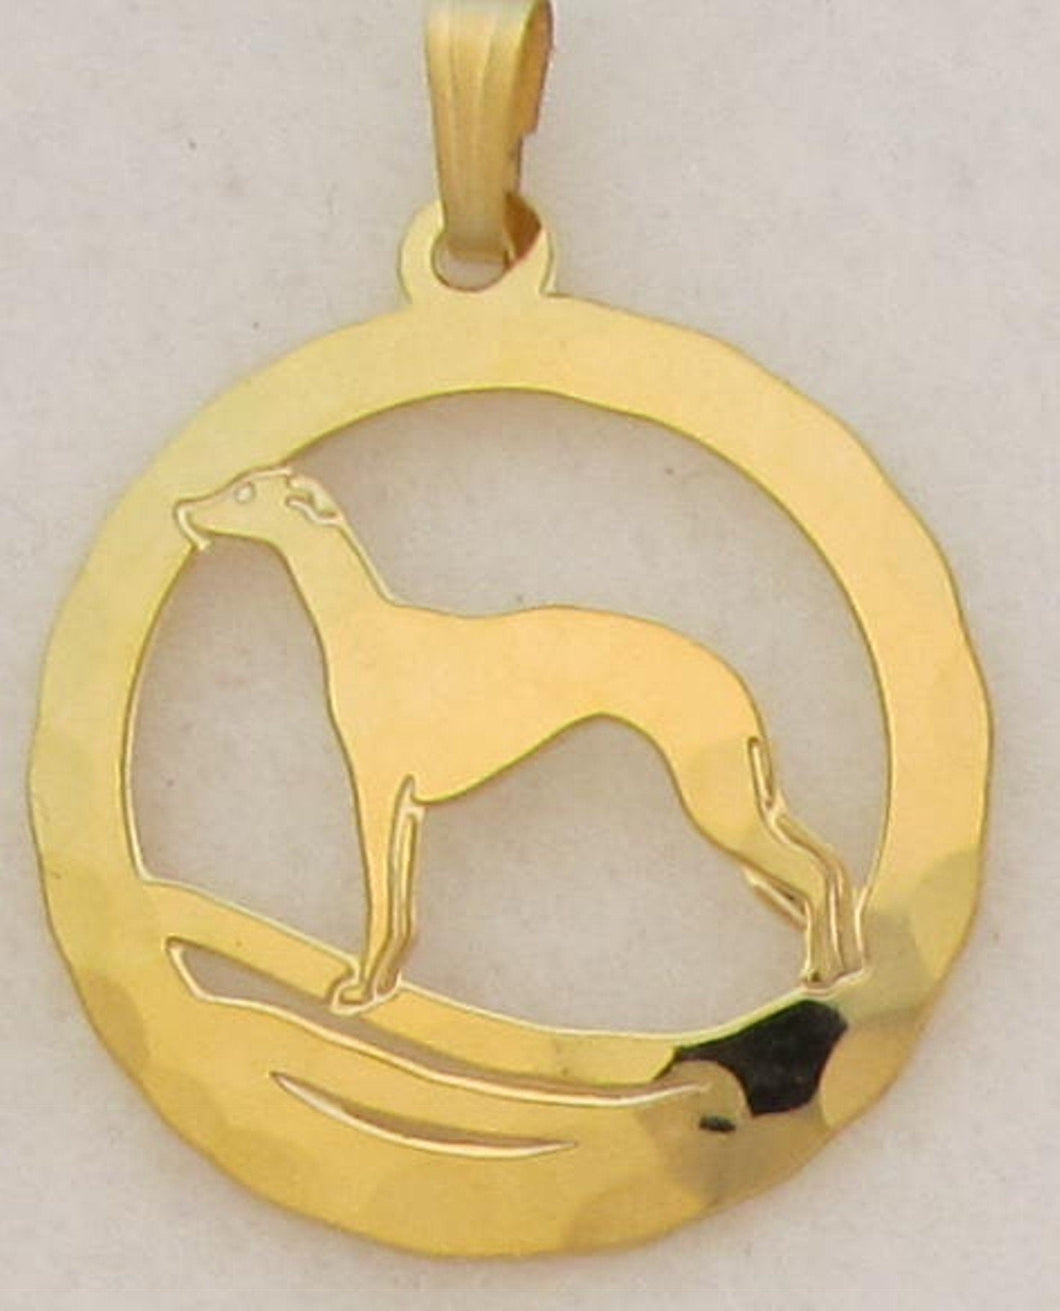 Greyhound Pendant by Touchstone Dog Designs // Greyhound Jewelry // Dog Breed Jewelry // AKC Breed Jewelry